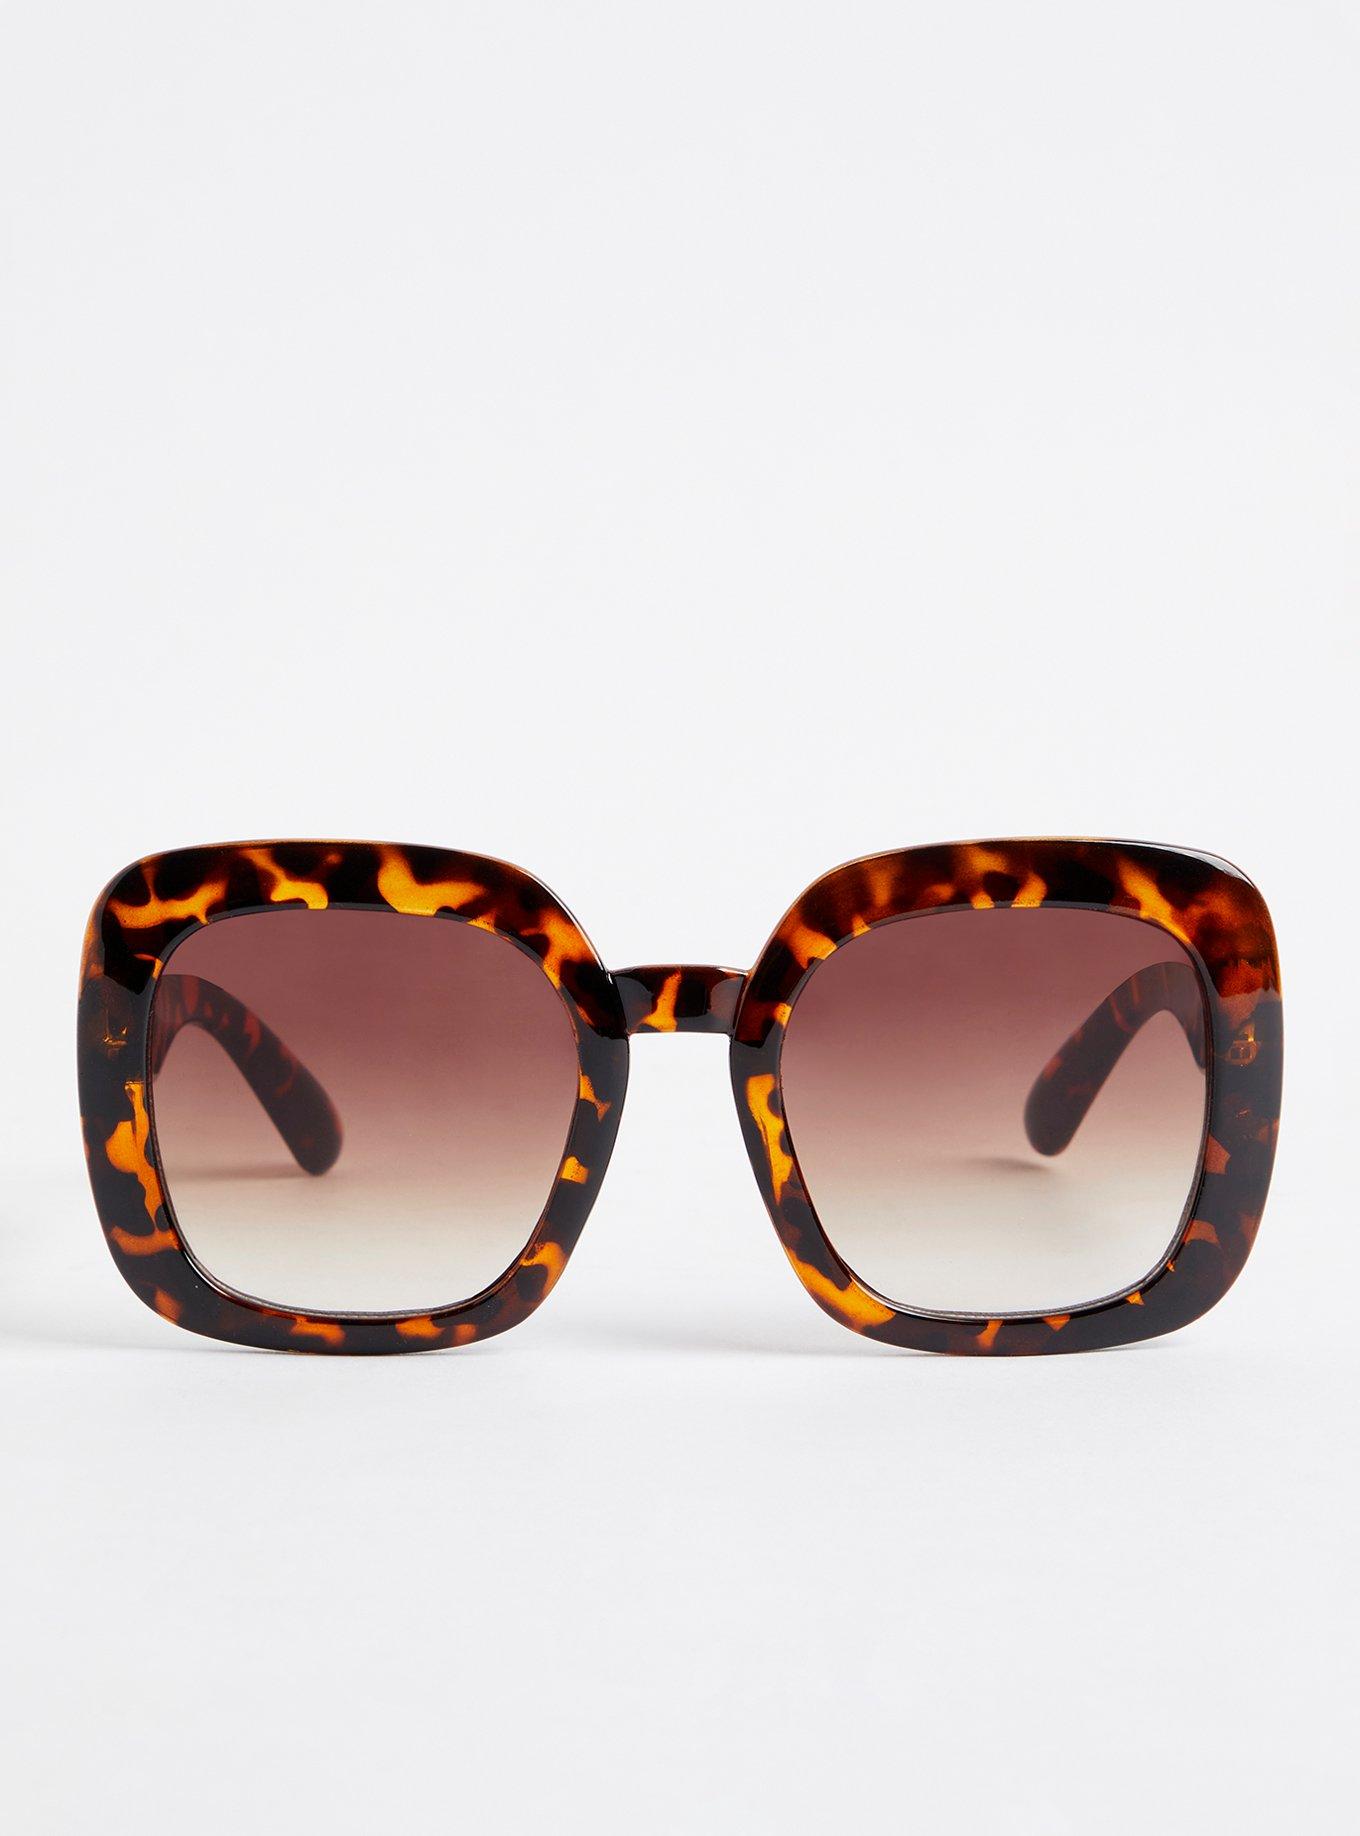 Plus Size - Tortoise Shell Square Oversized Sunglasses - Brown - Torrid